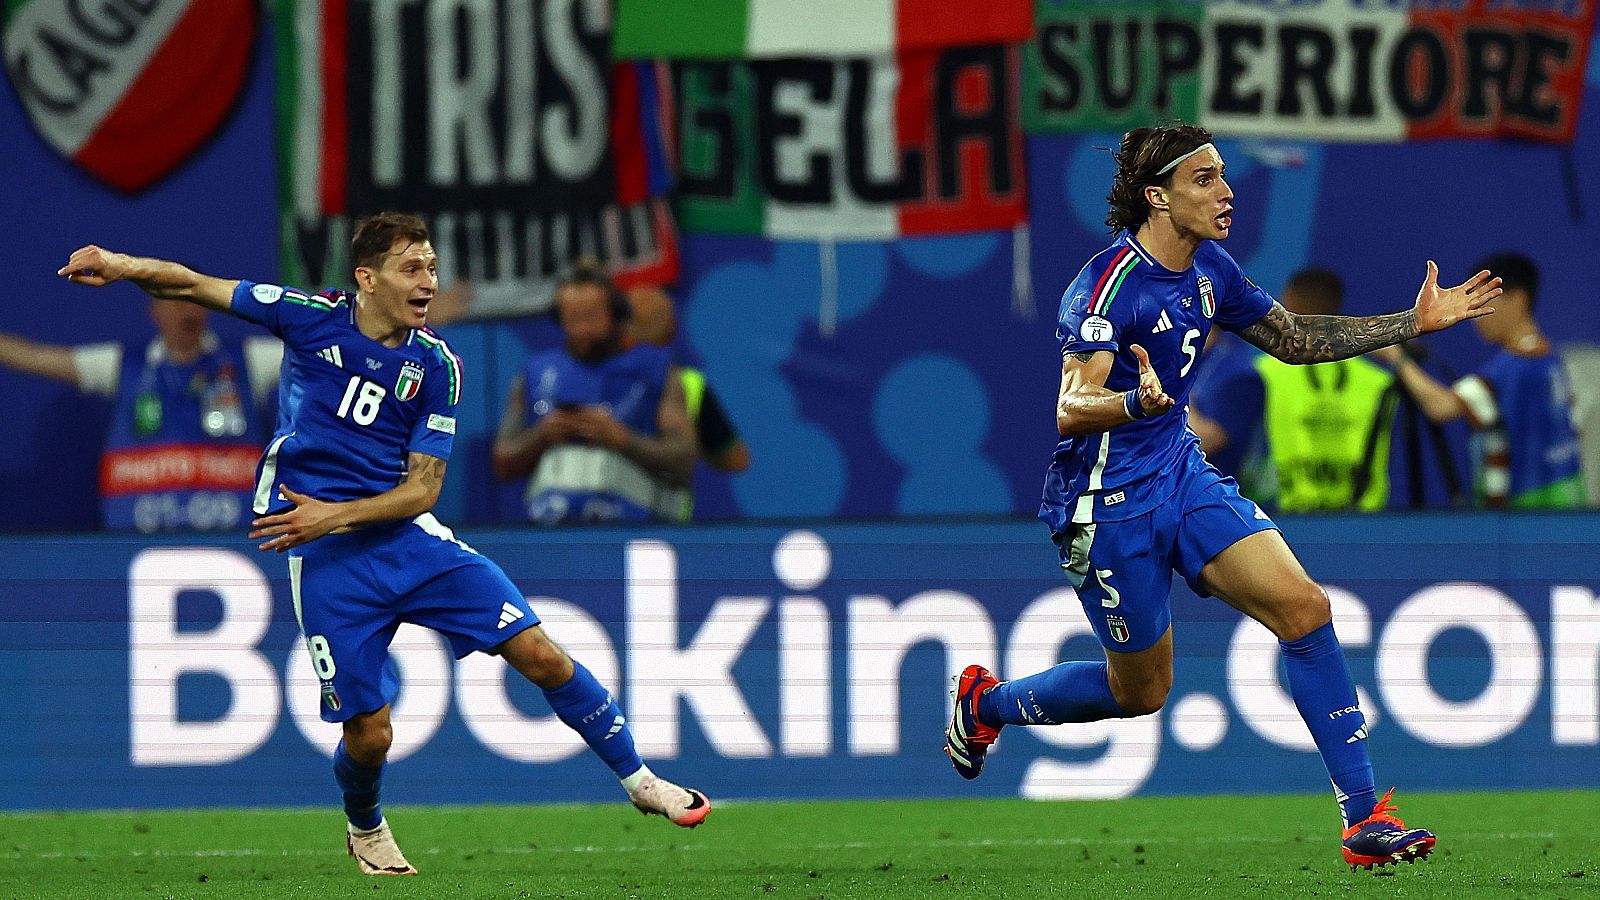 Italia tira de épica para empatar el partido en el minuto 98